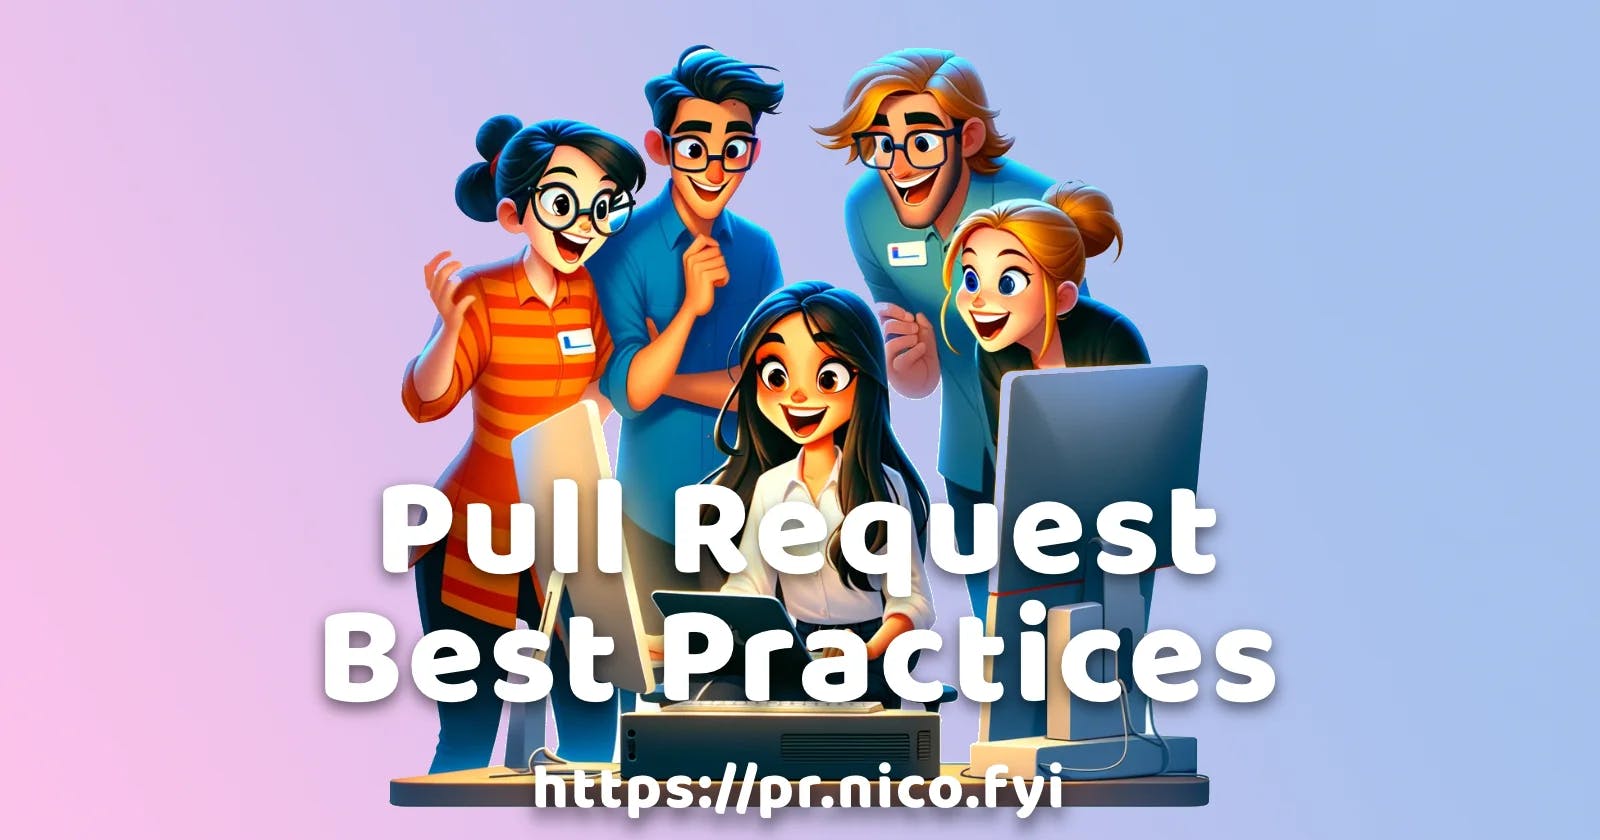 Book alert: Pull Request Best Practices